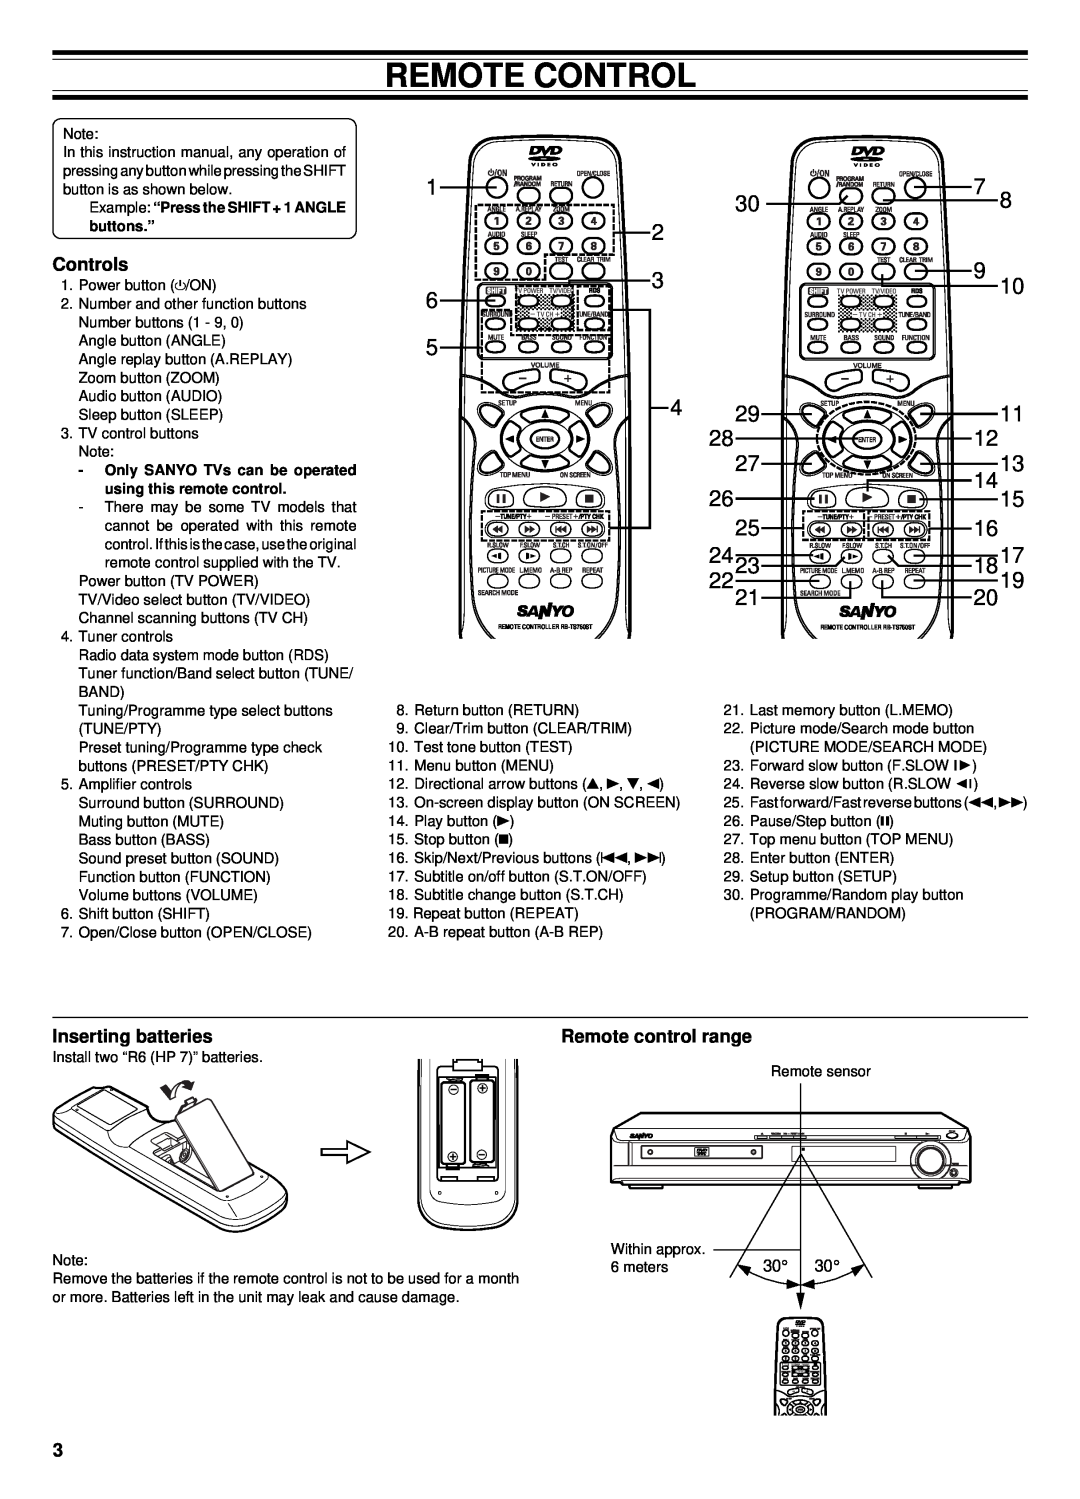 Sanyo DC-TS760 instruction manual Remote Control, Controls, Inserting batteries 